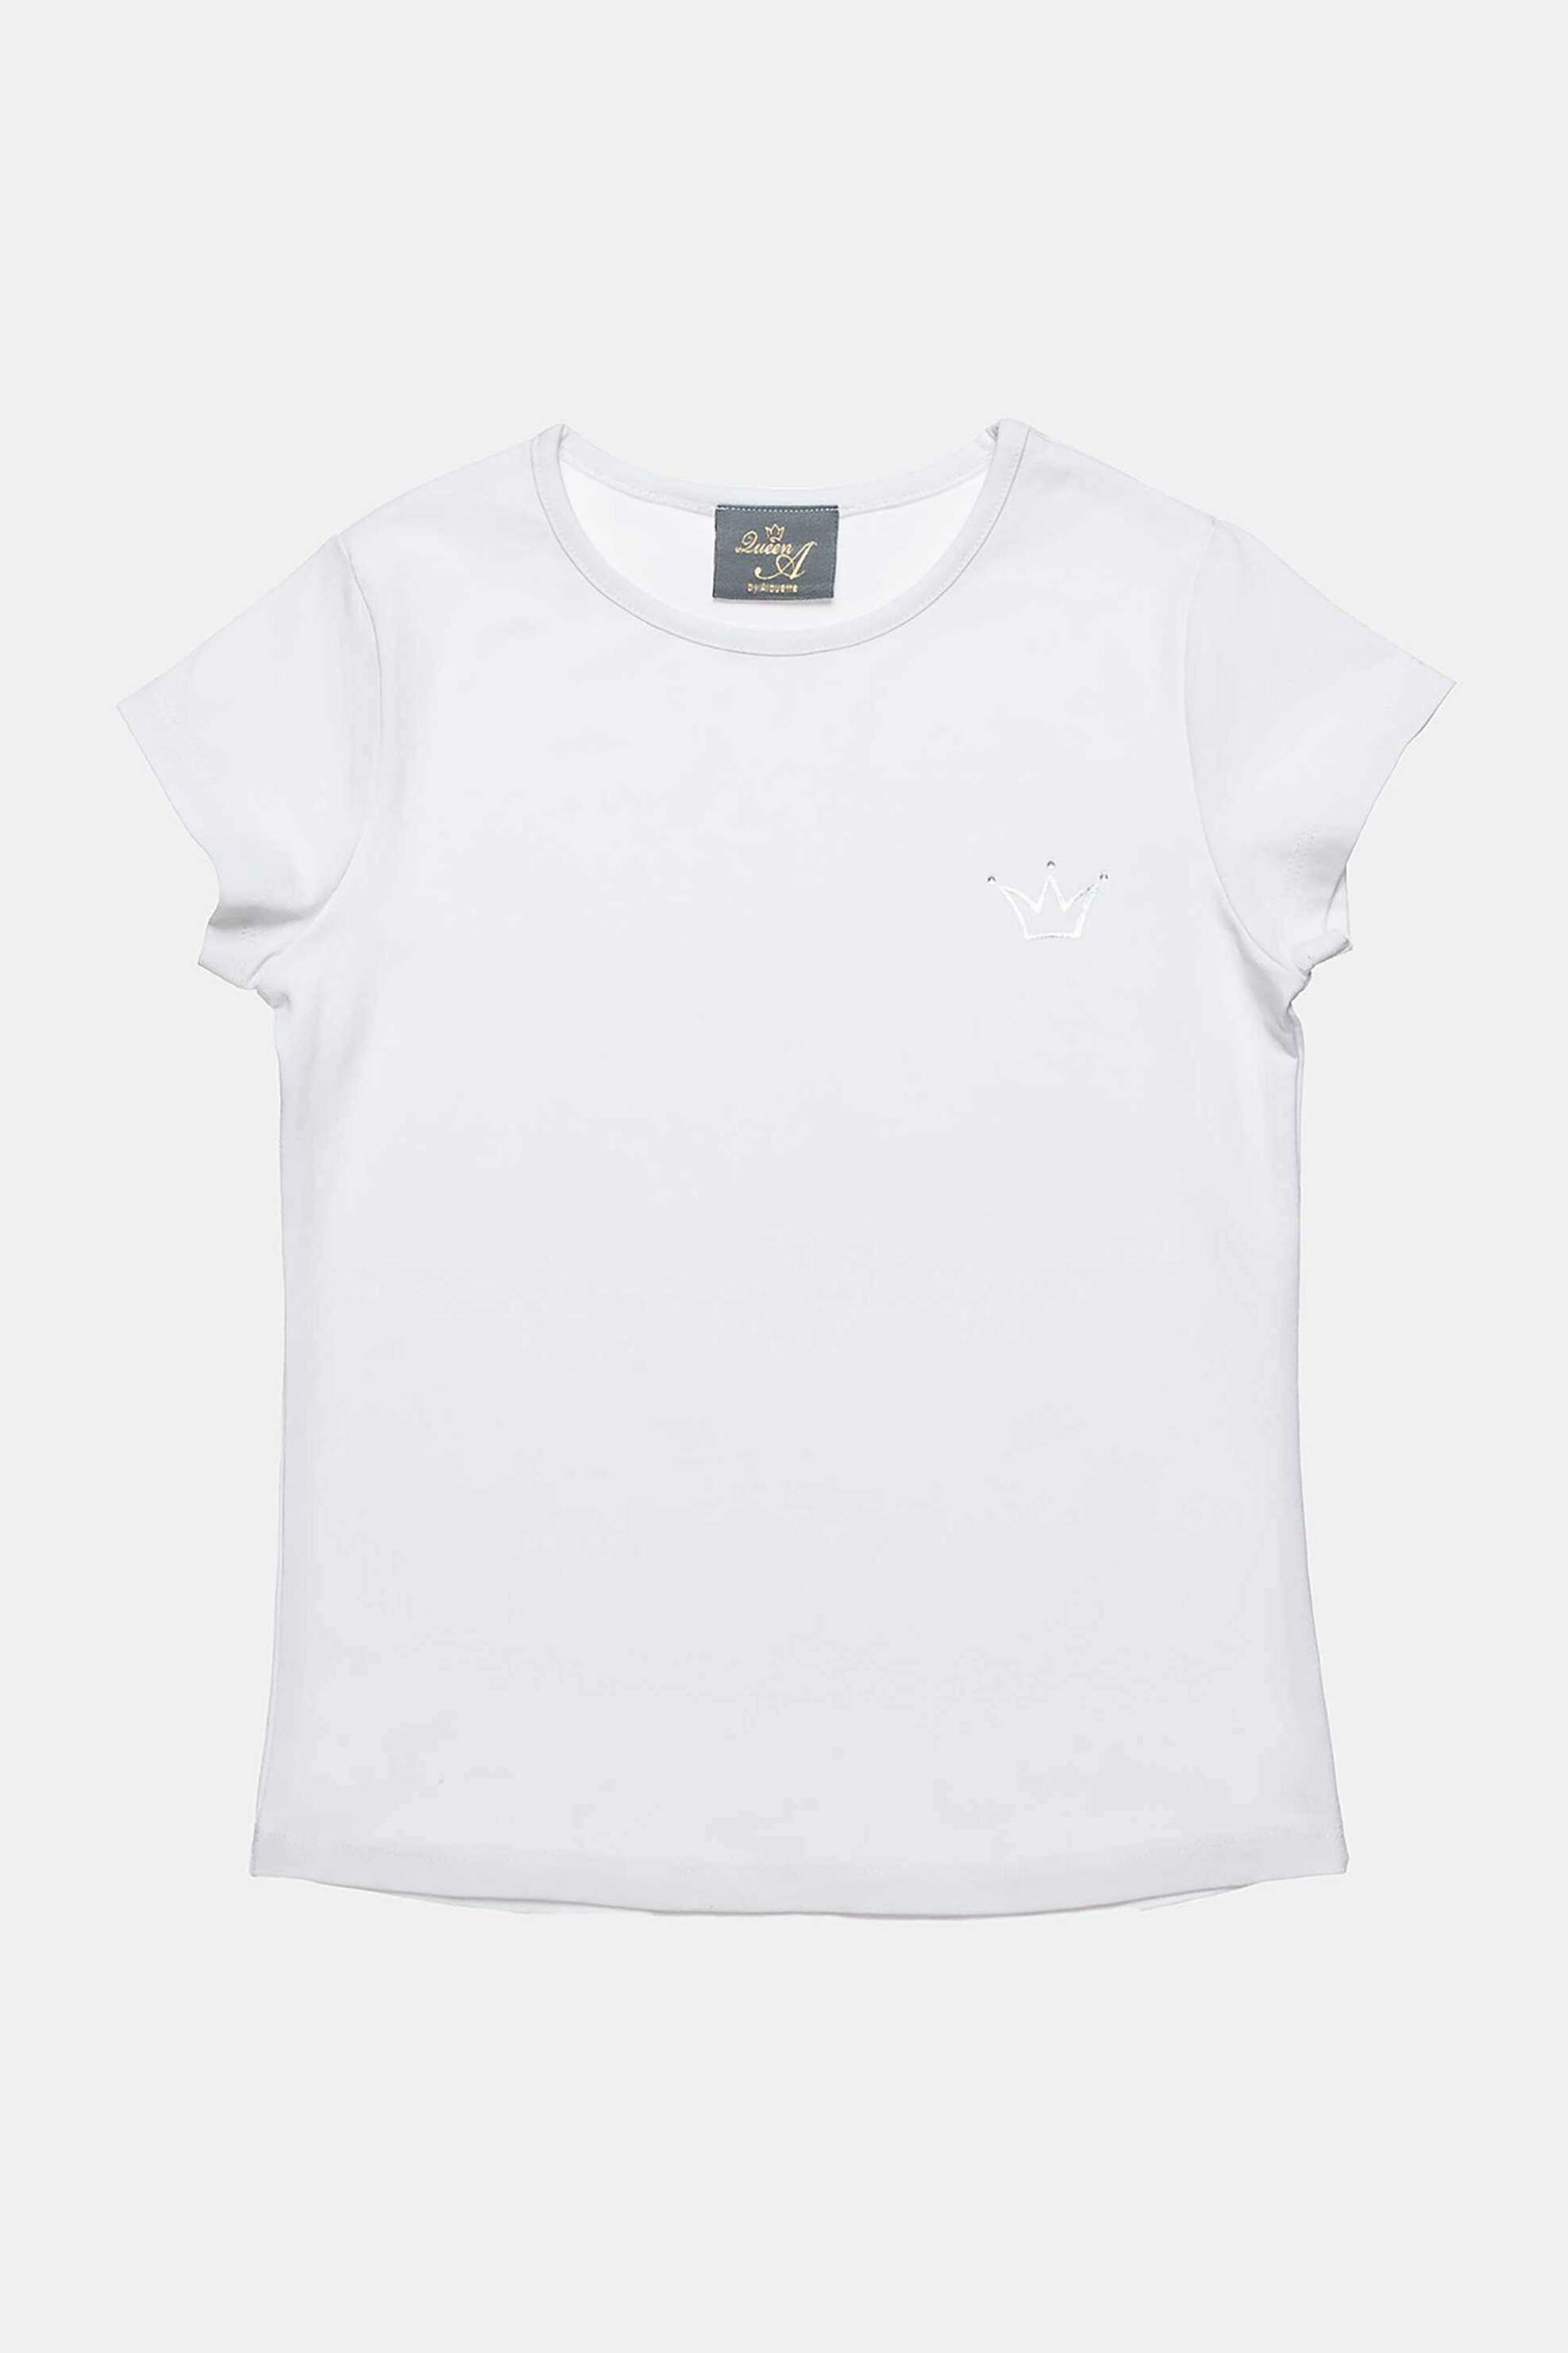 Alouette παιδικό T-shirt με μεταλλιζέ κορώνα με στρας (6-16 ετών) - 00952921 Λευκό